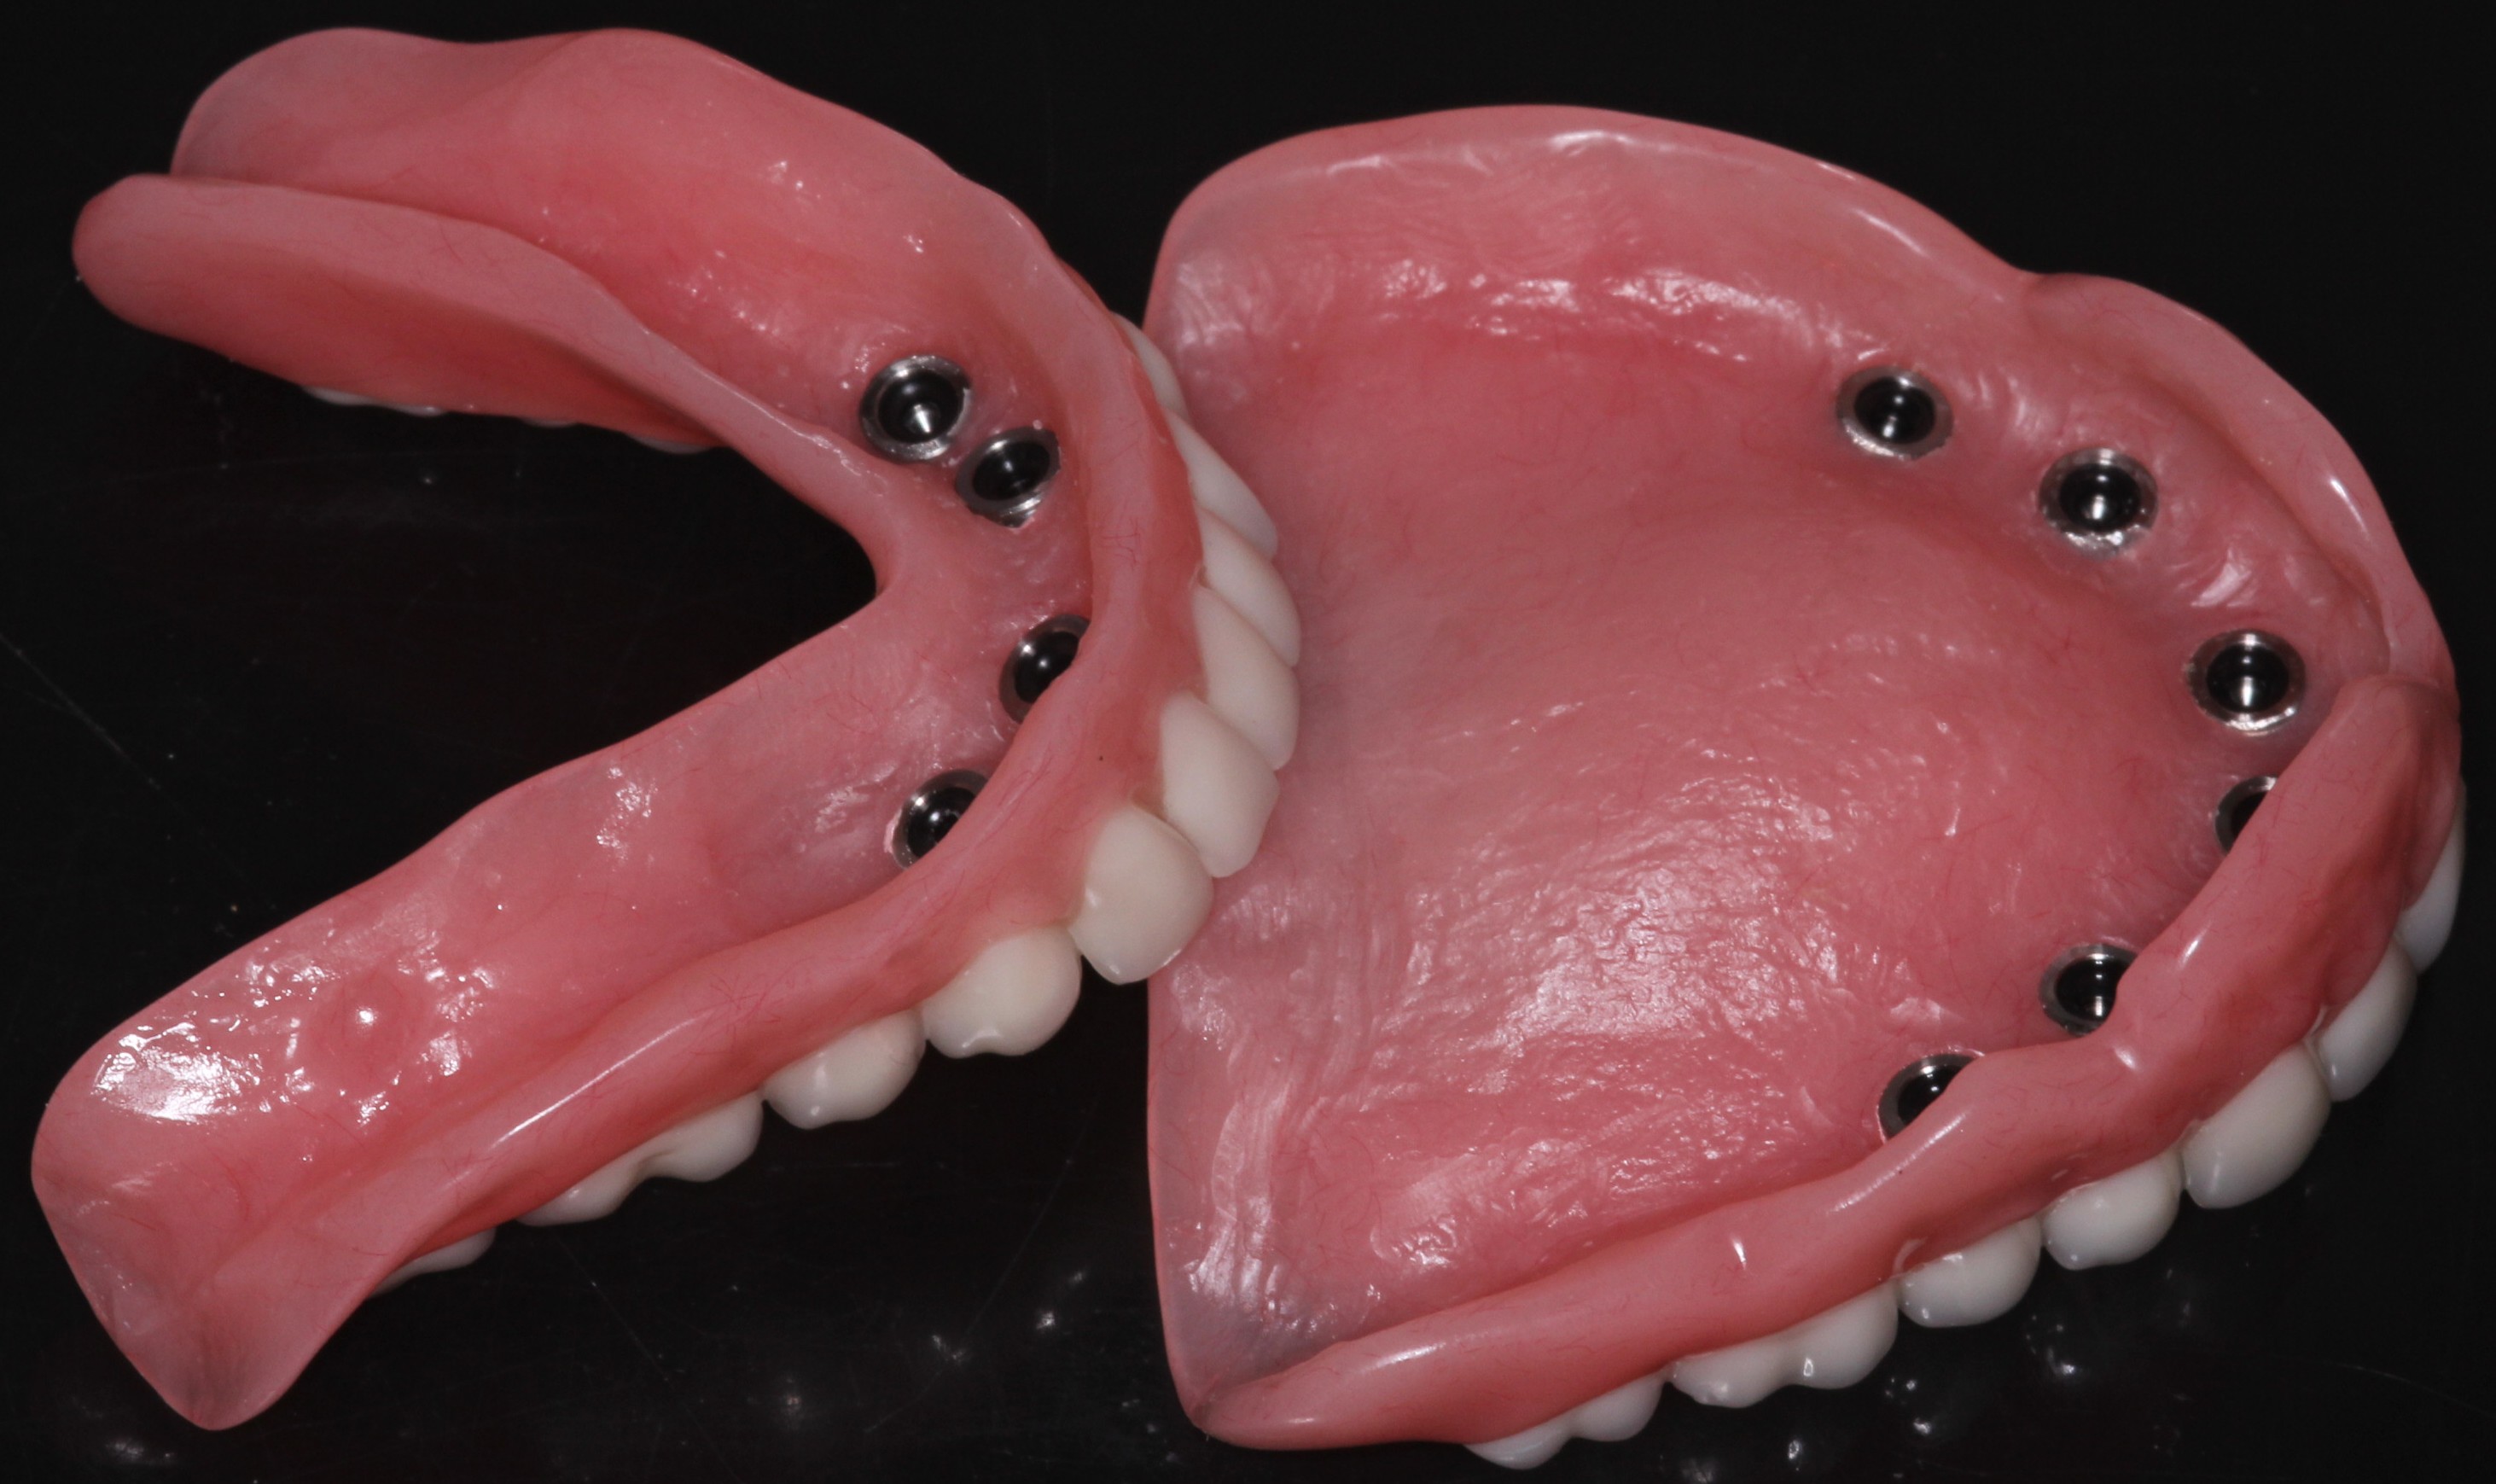 Artificial denture